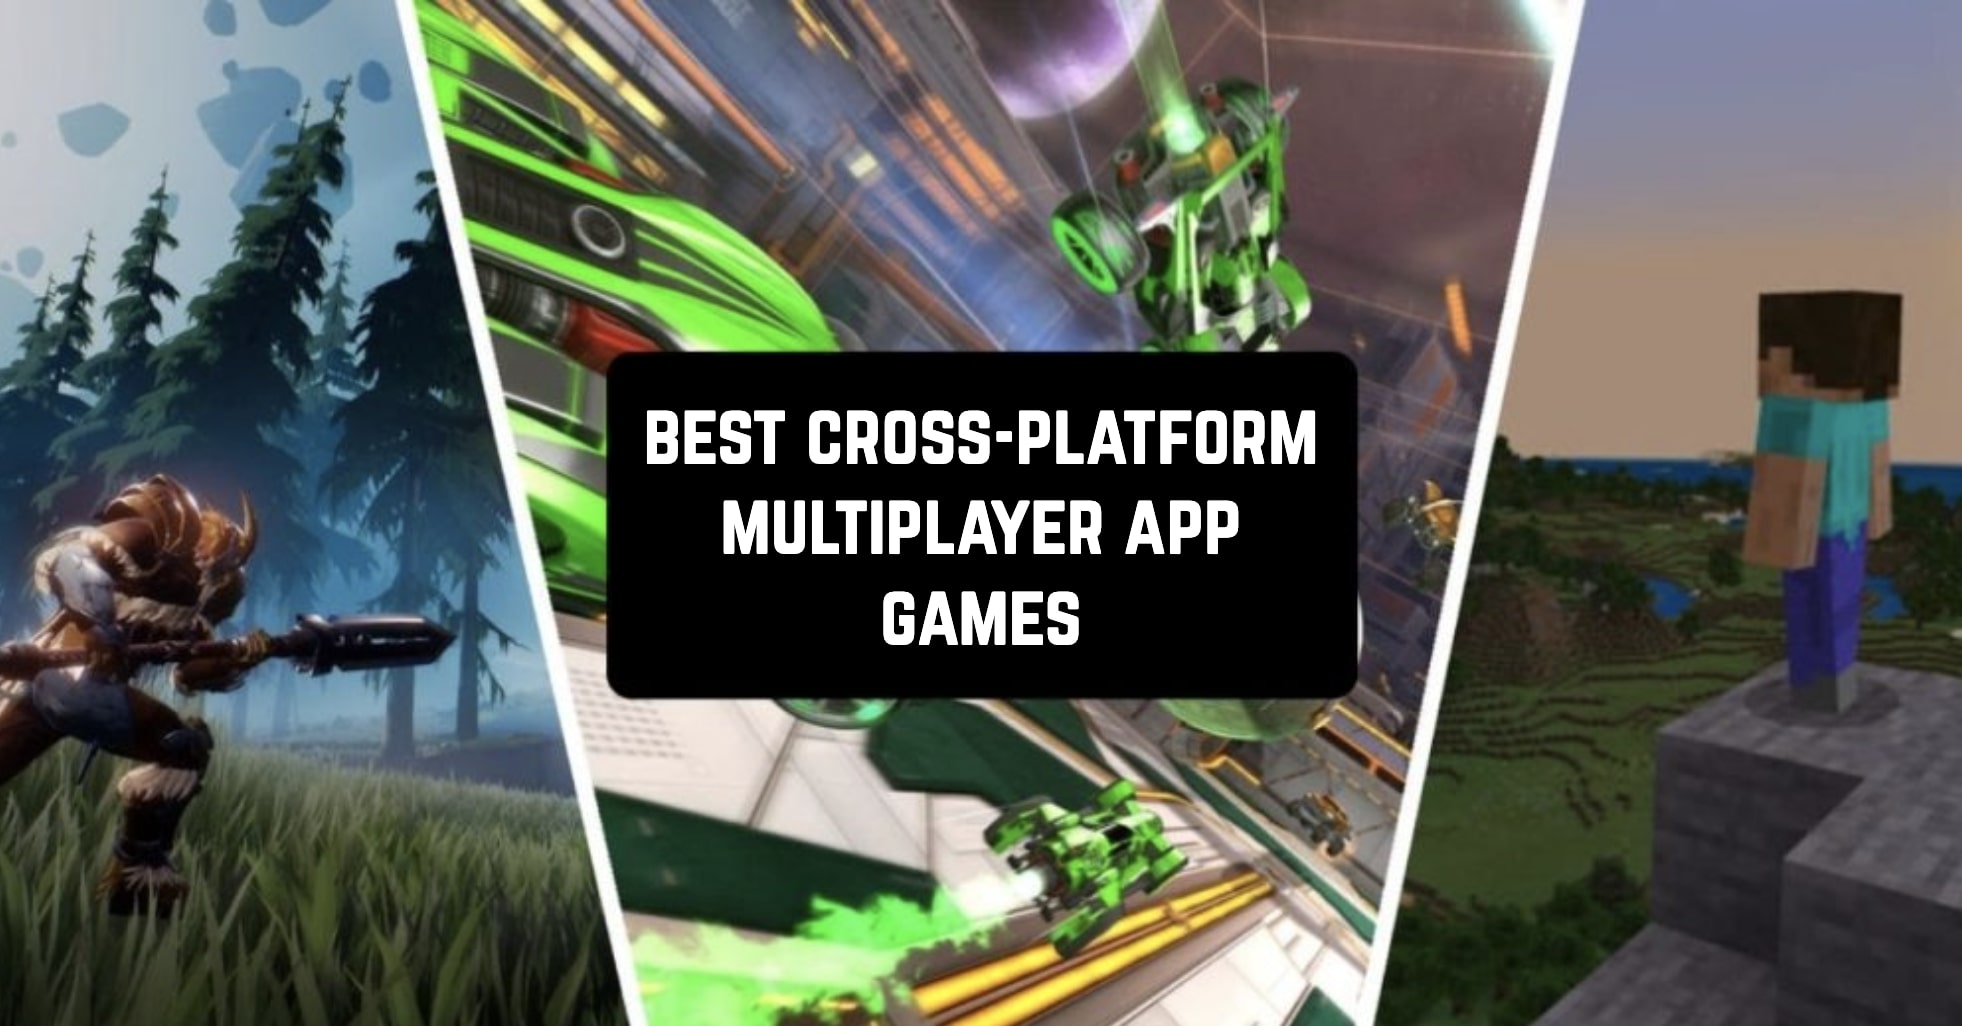 Best cross platform games 2023